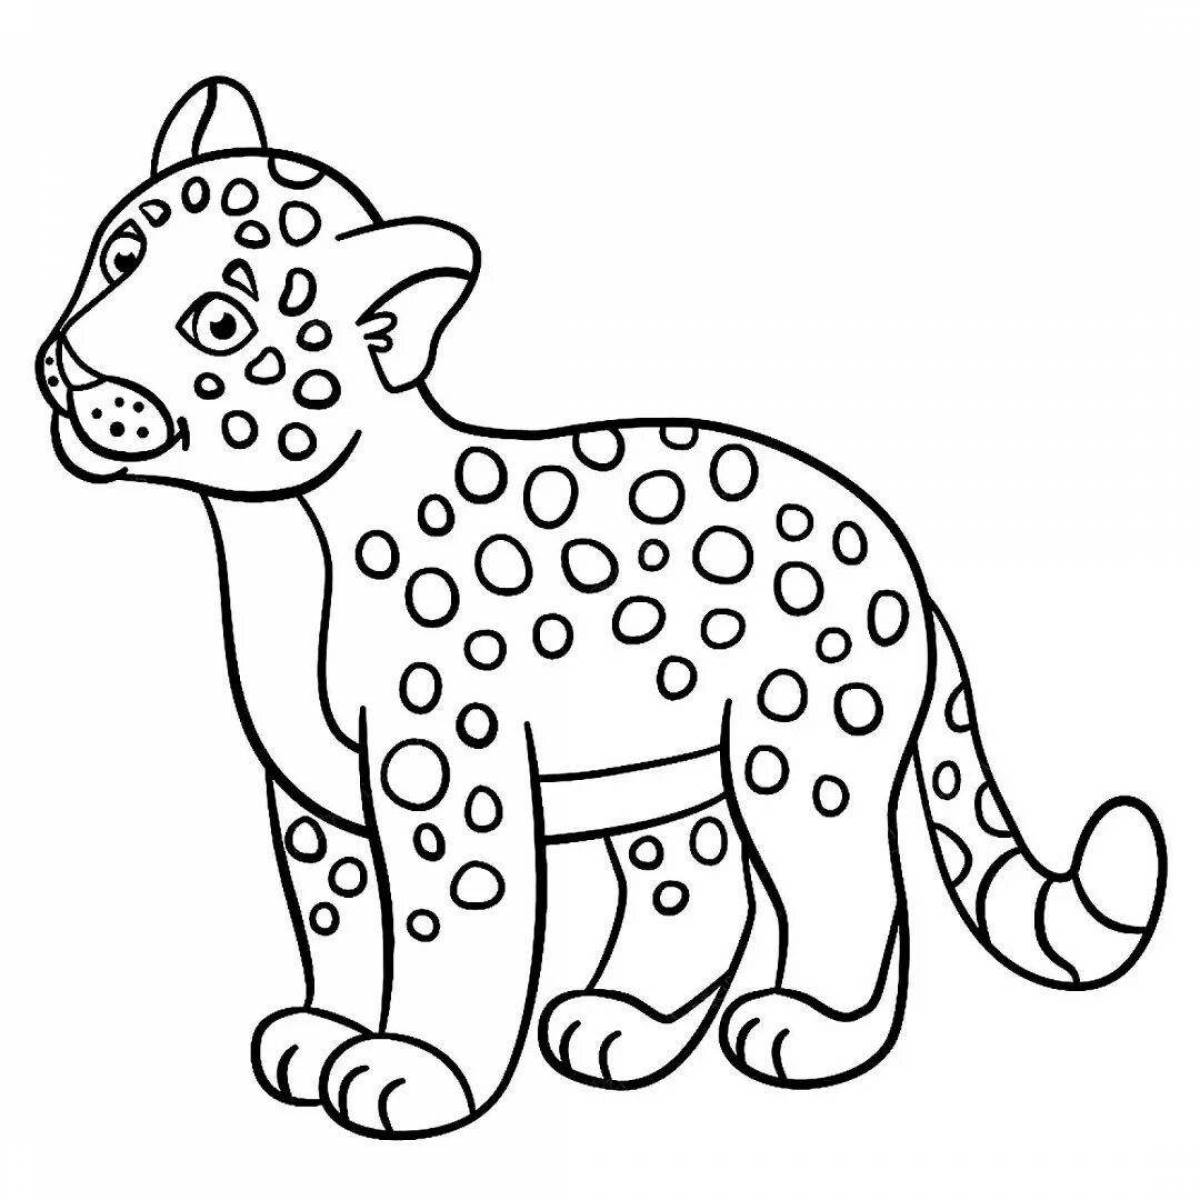 Adorable jaguar coloring book for kids